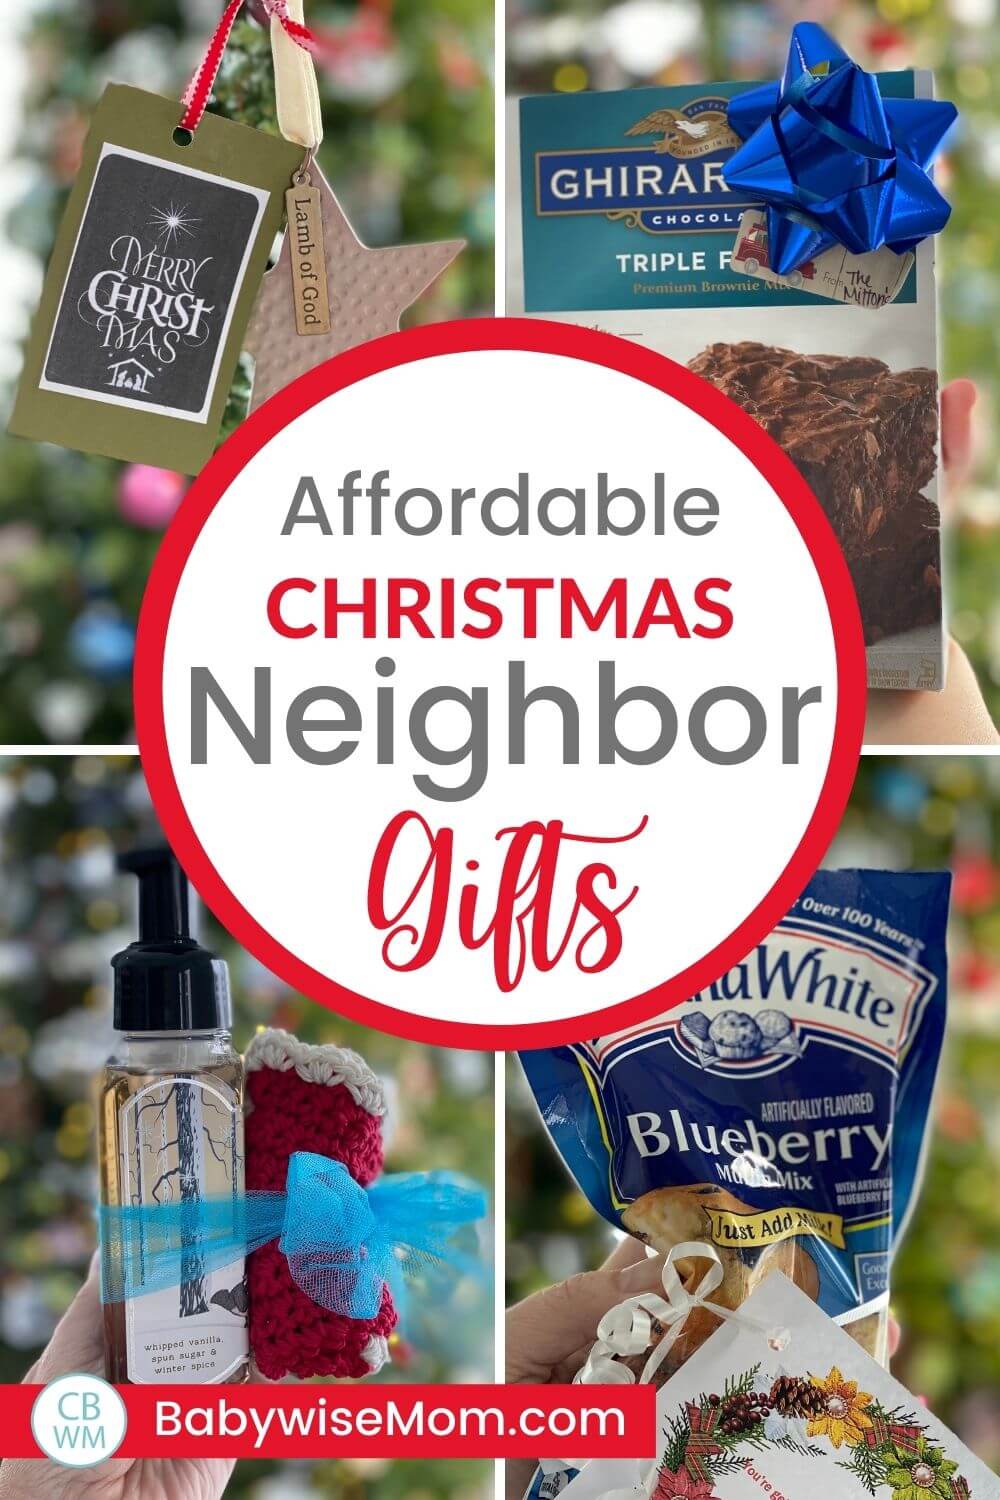 https://www.babywisemom.com/wp-content/uploads/2020/11/Affordable-neighbor-gifts.jpg